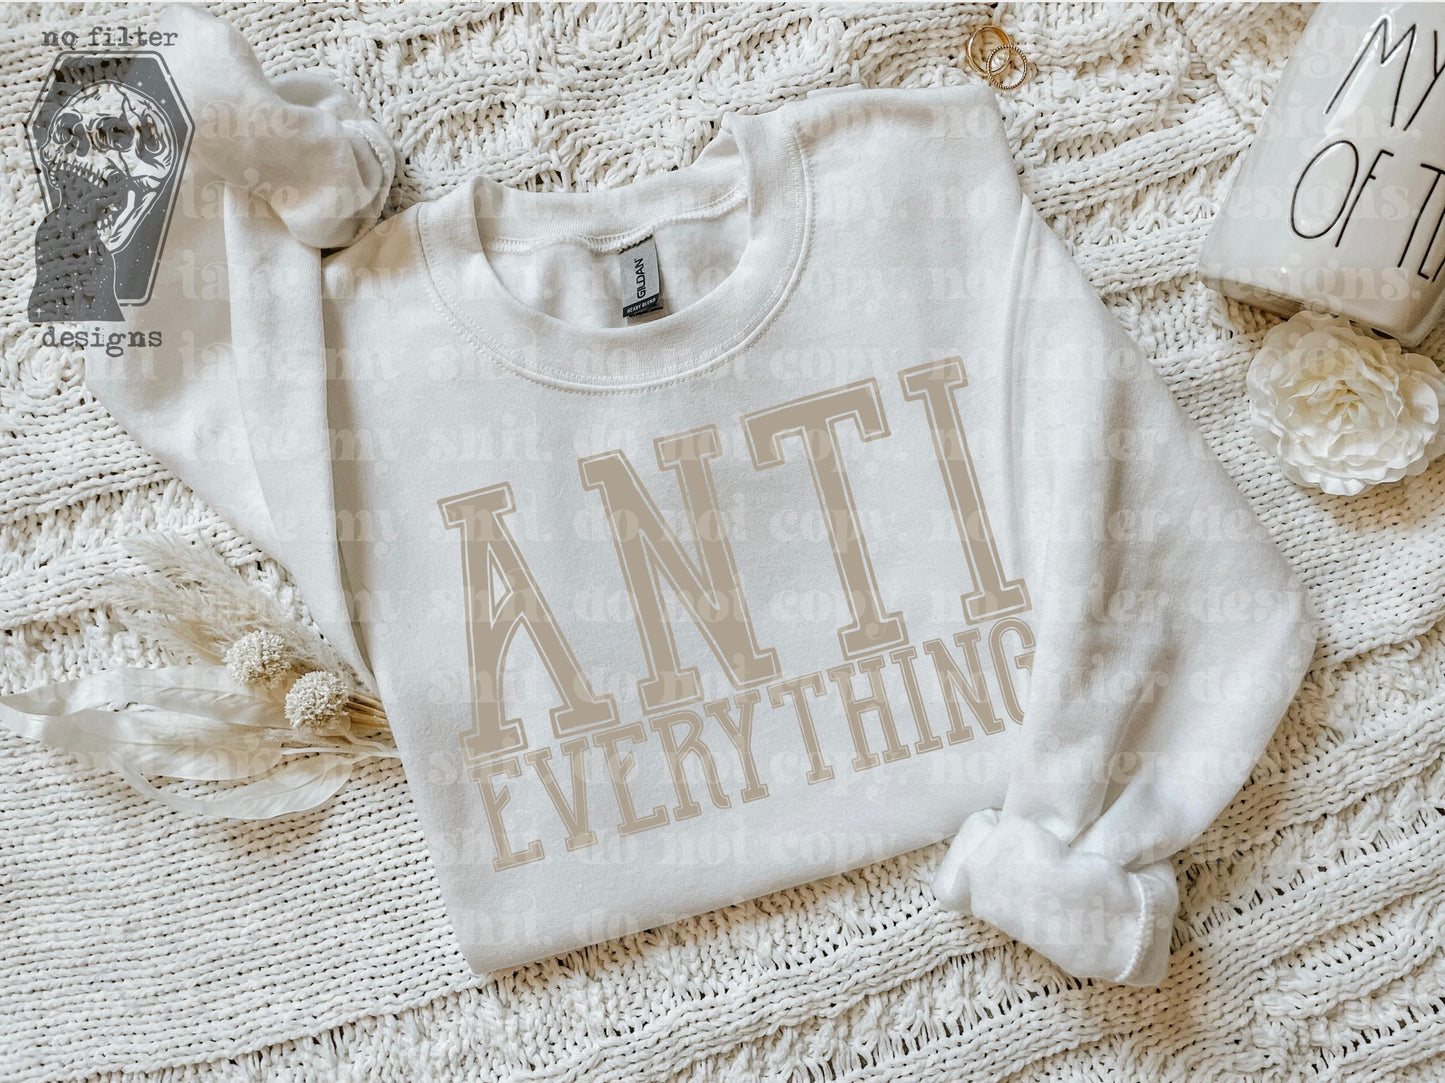 Anti Everything